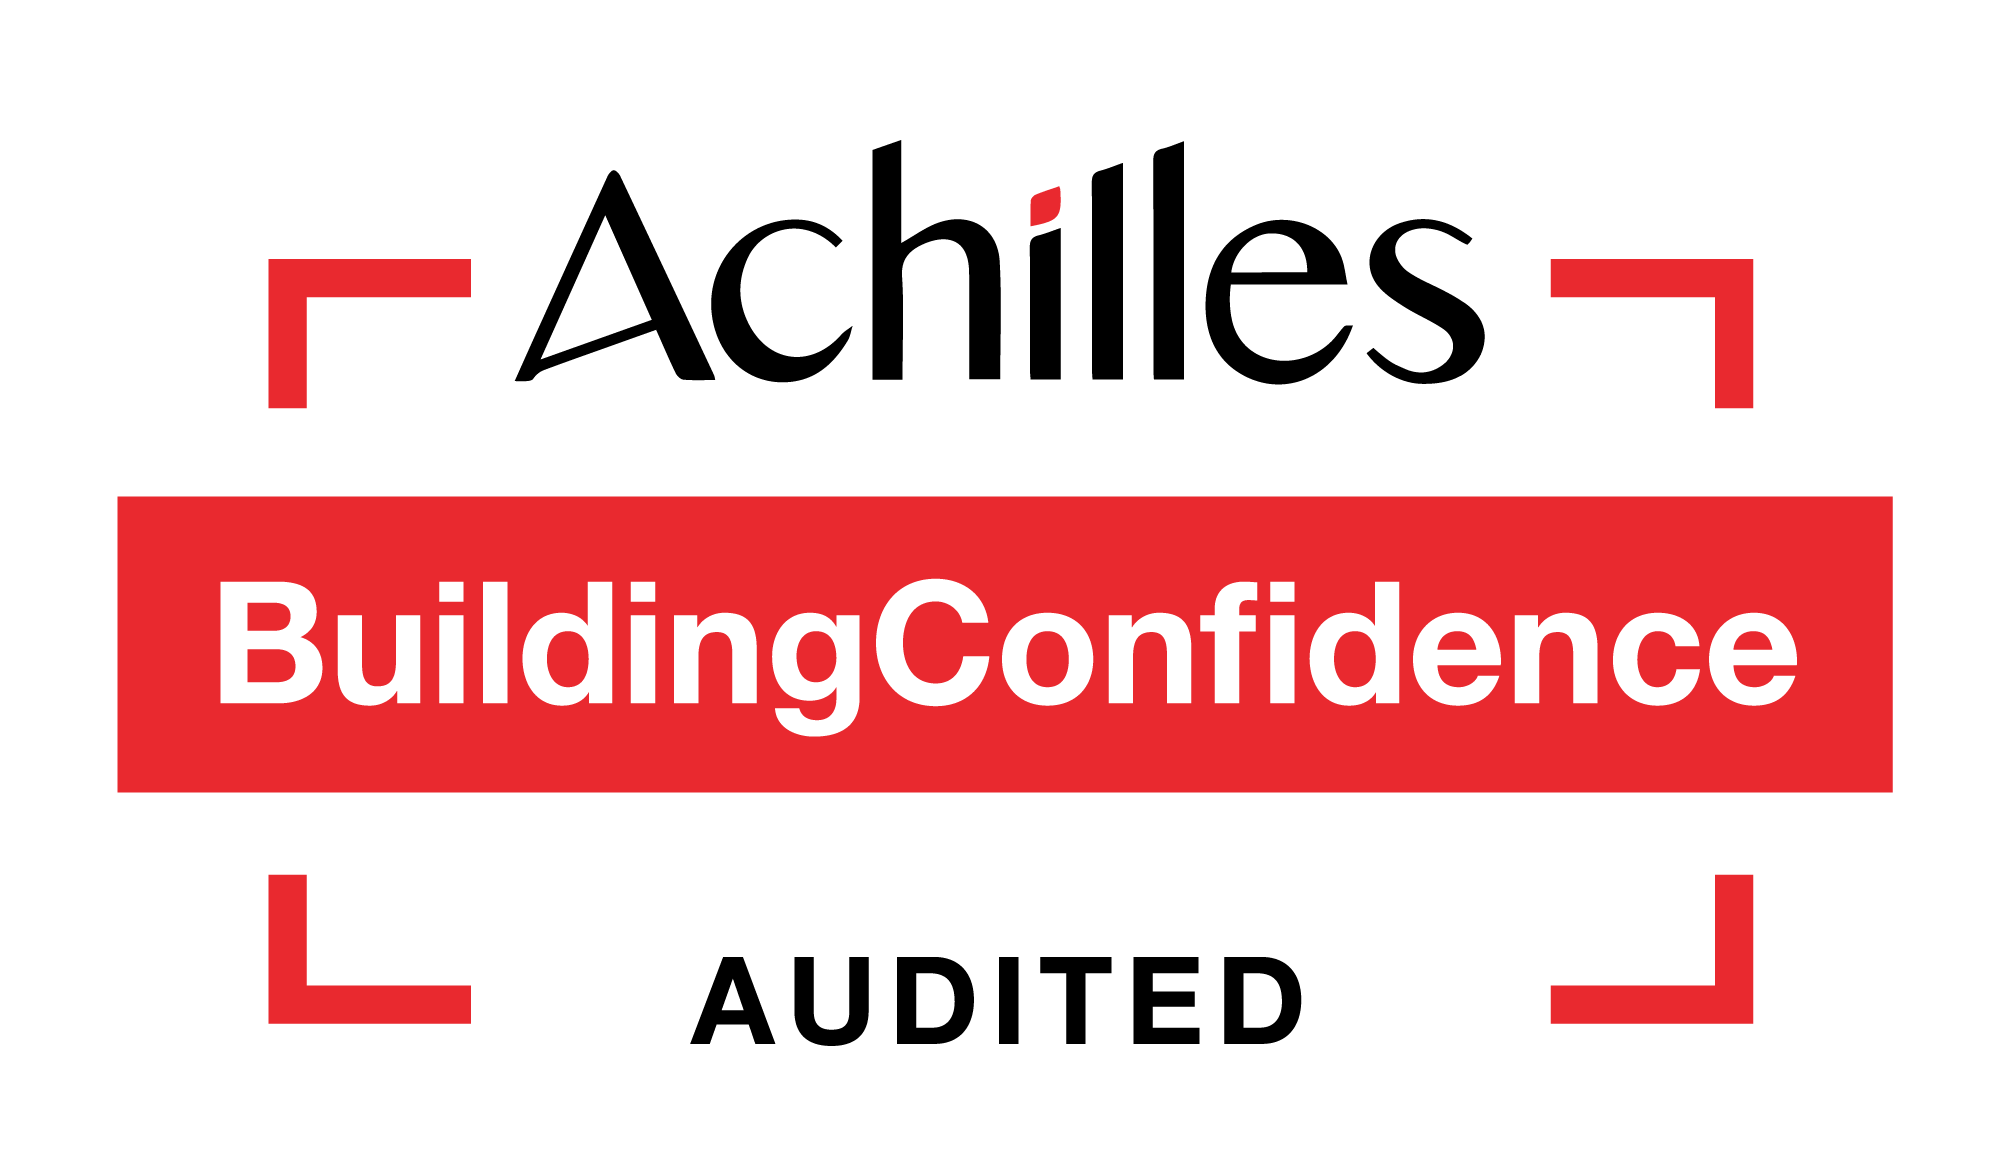 Achilles-BuildingConfidence-Stamp-Audited-1.png